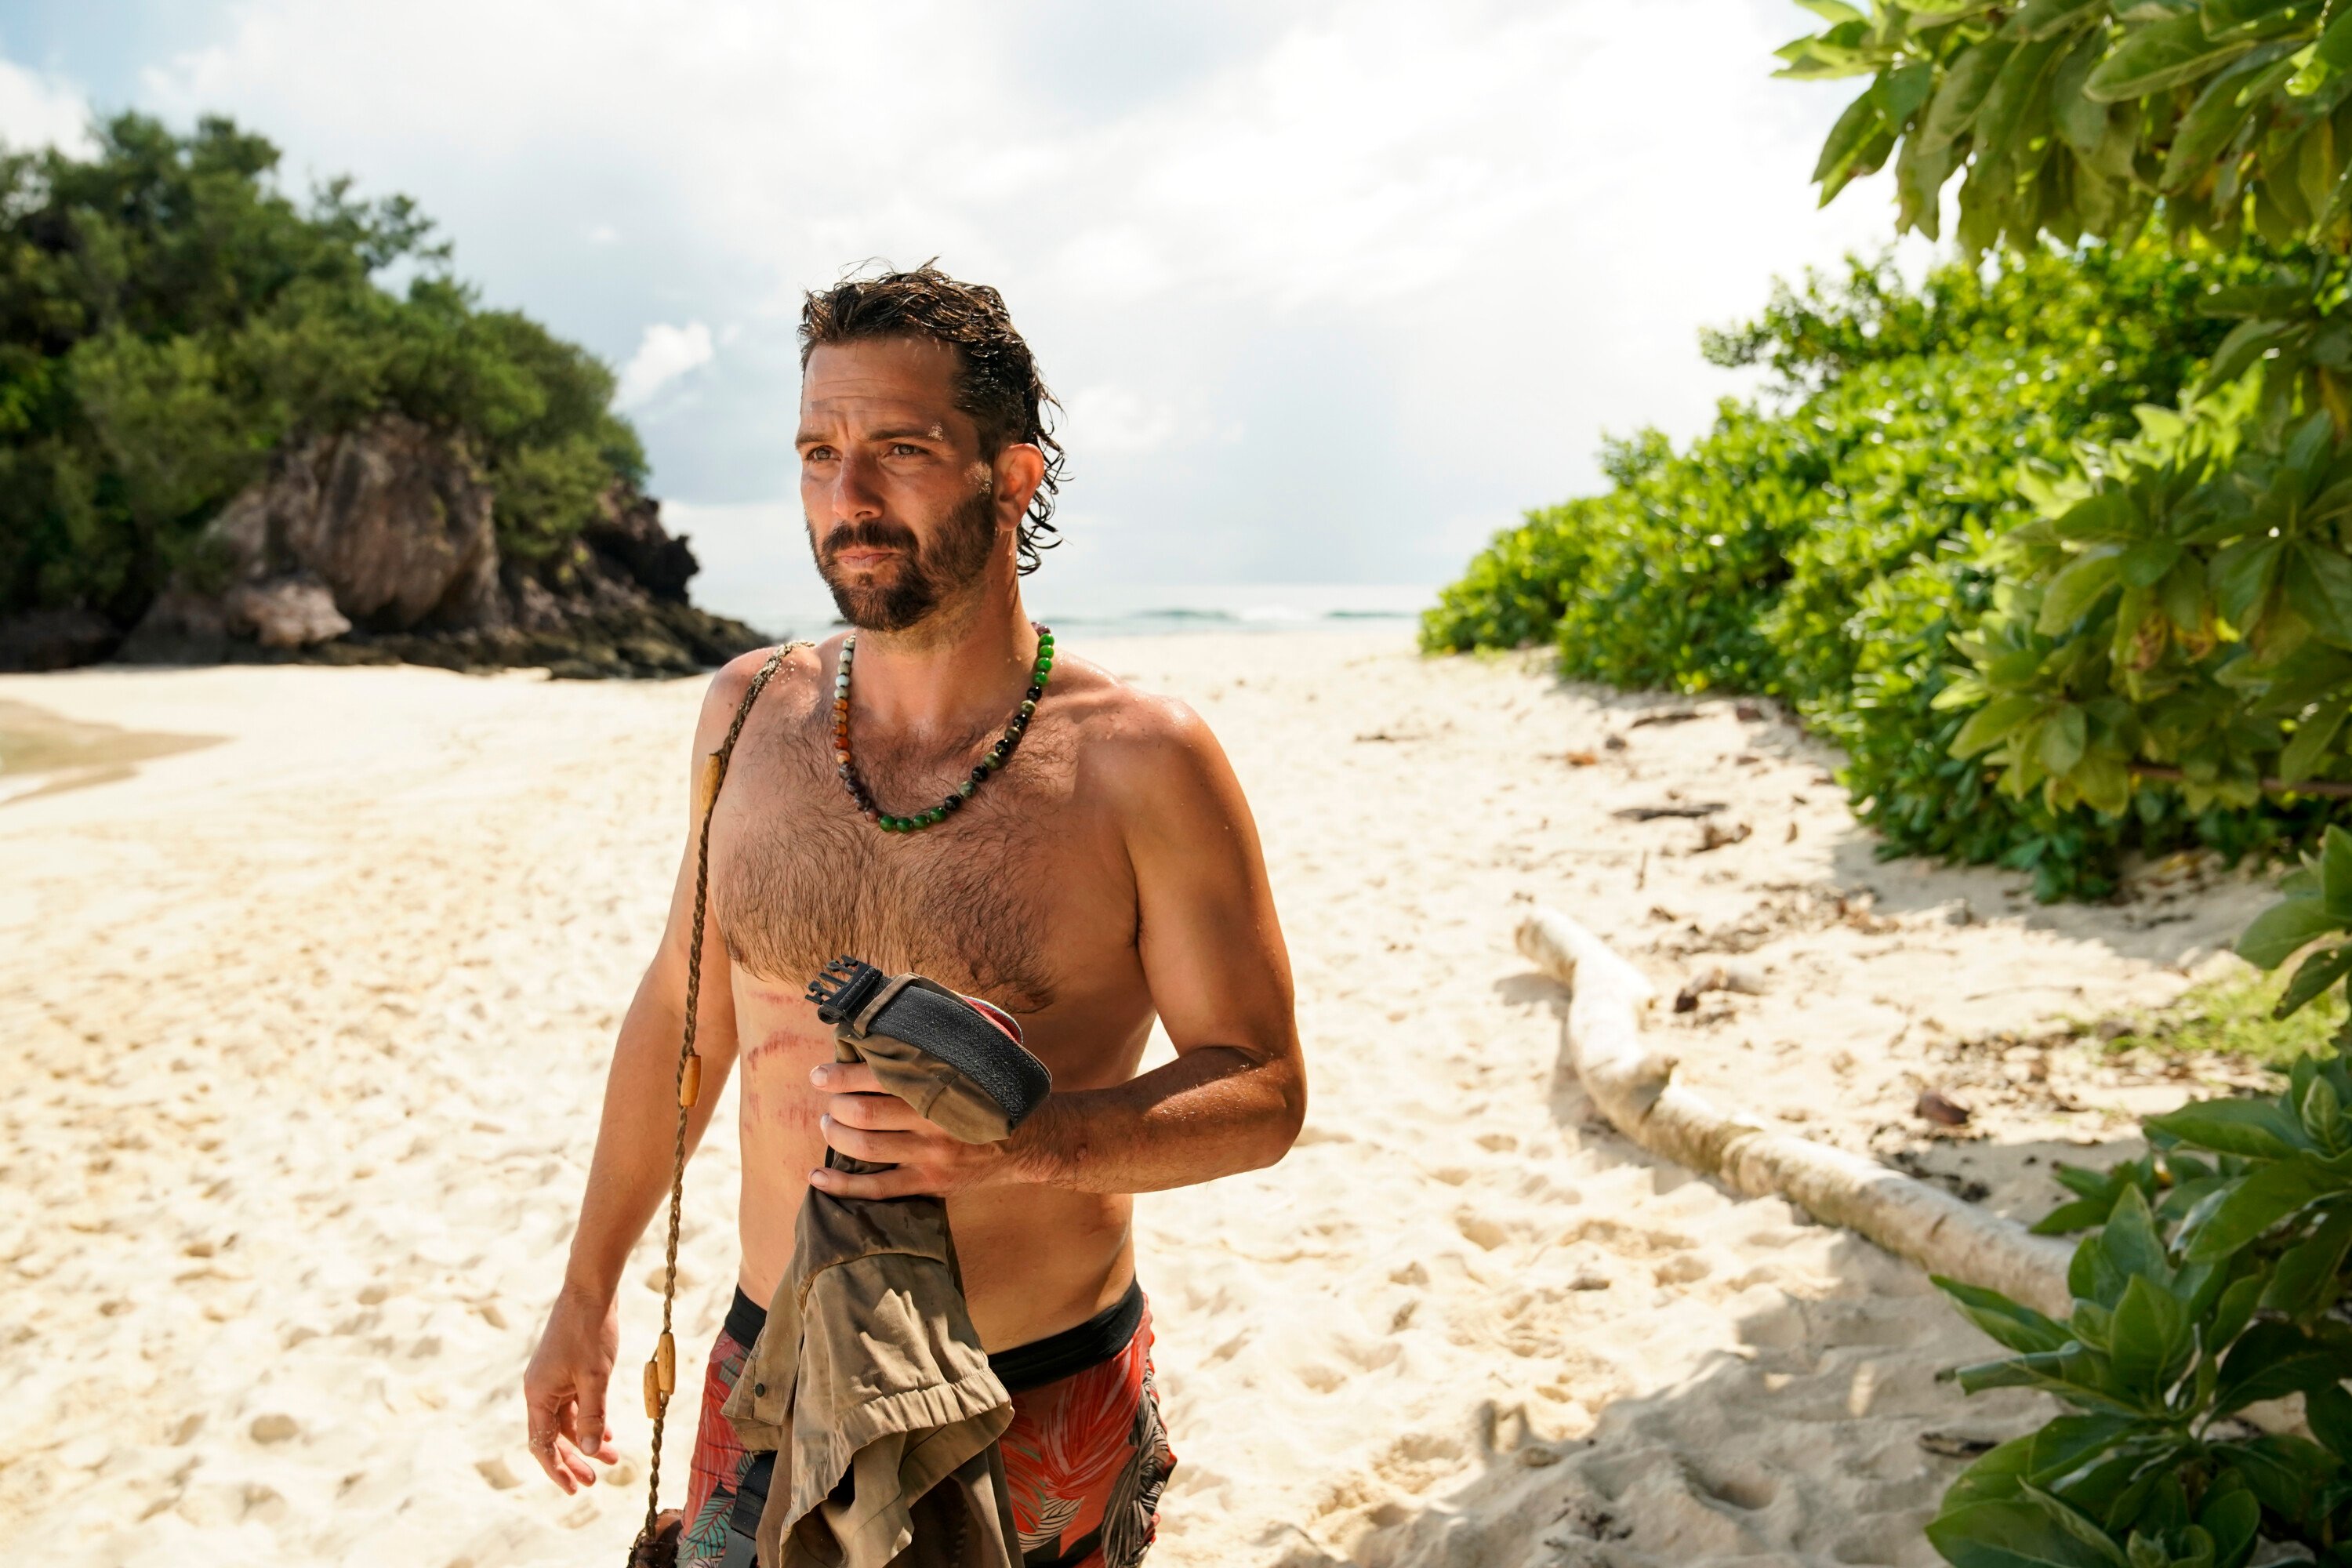 Cody Assenmacher, who might be the 'Survivor' Season 43 winner, walks on the beach wearing